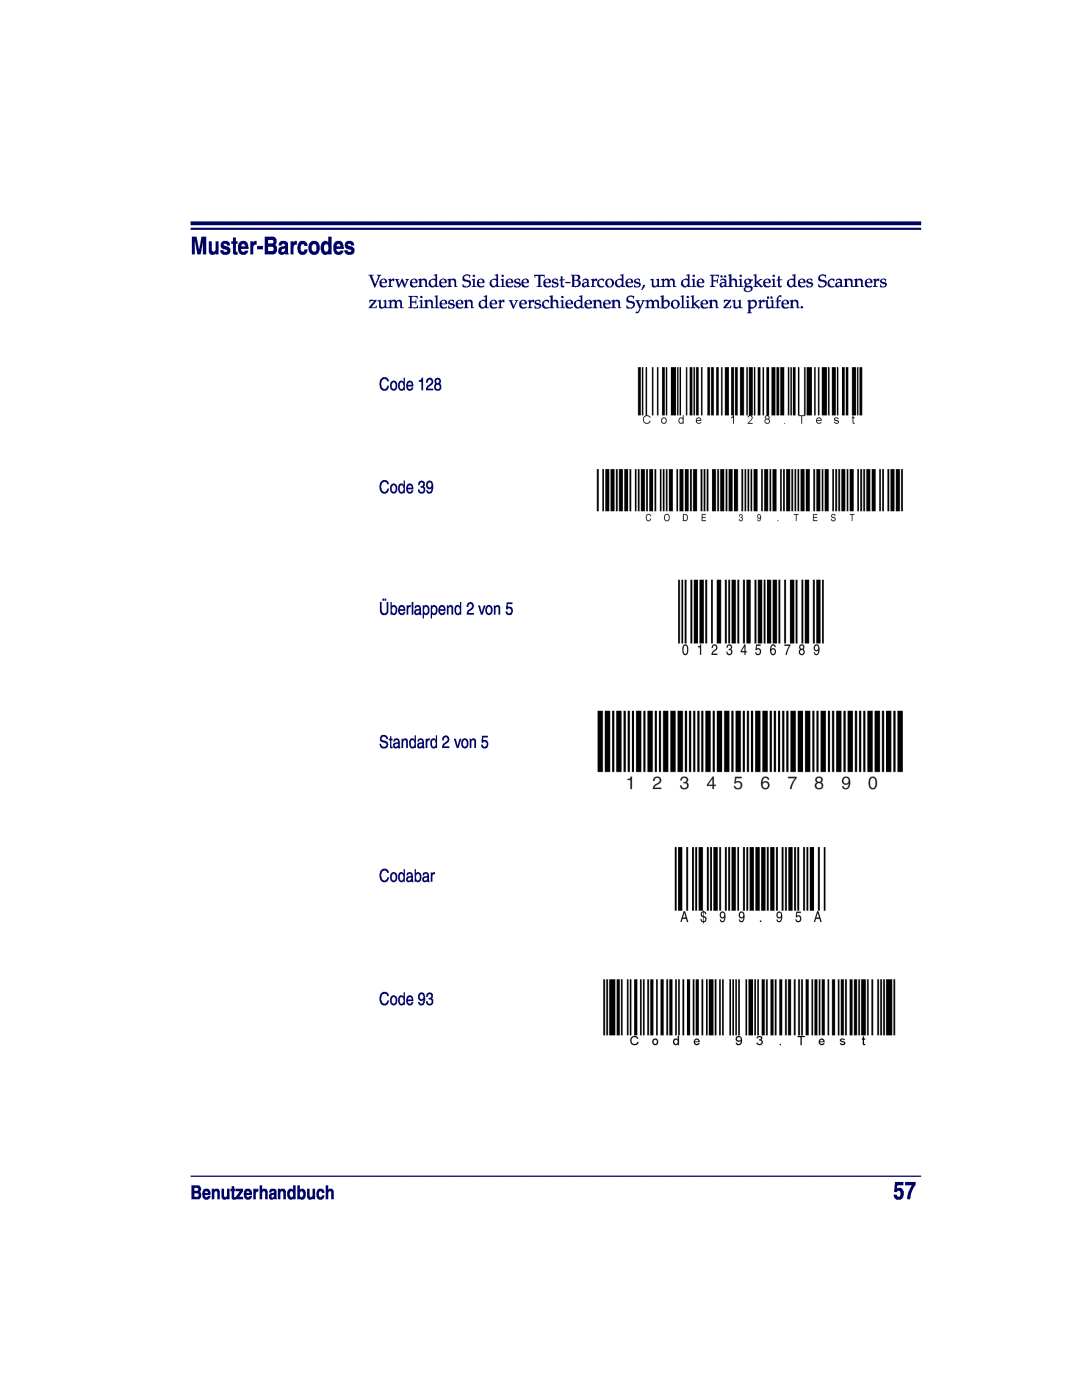 Datalogic Scanning XLR, SR, HD Muster-Barcodes, Benutzerhandbuch, 0 1 2 3 4, A $ 9 9 . 9 5 A, C o d e, 1 2 8 . T e s t 